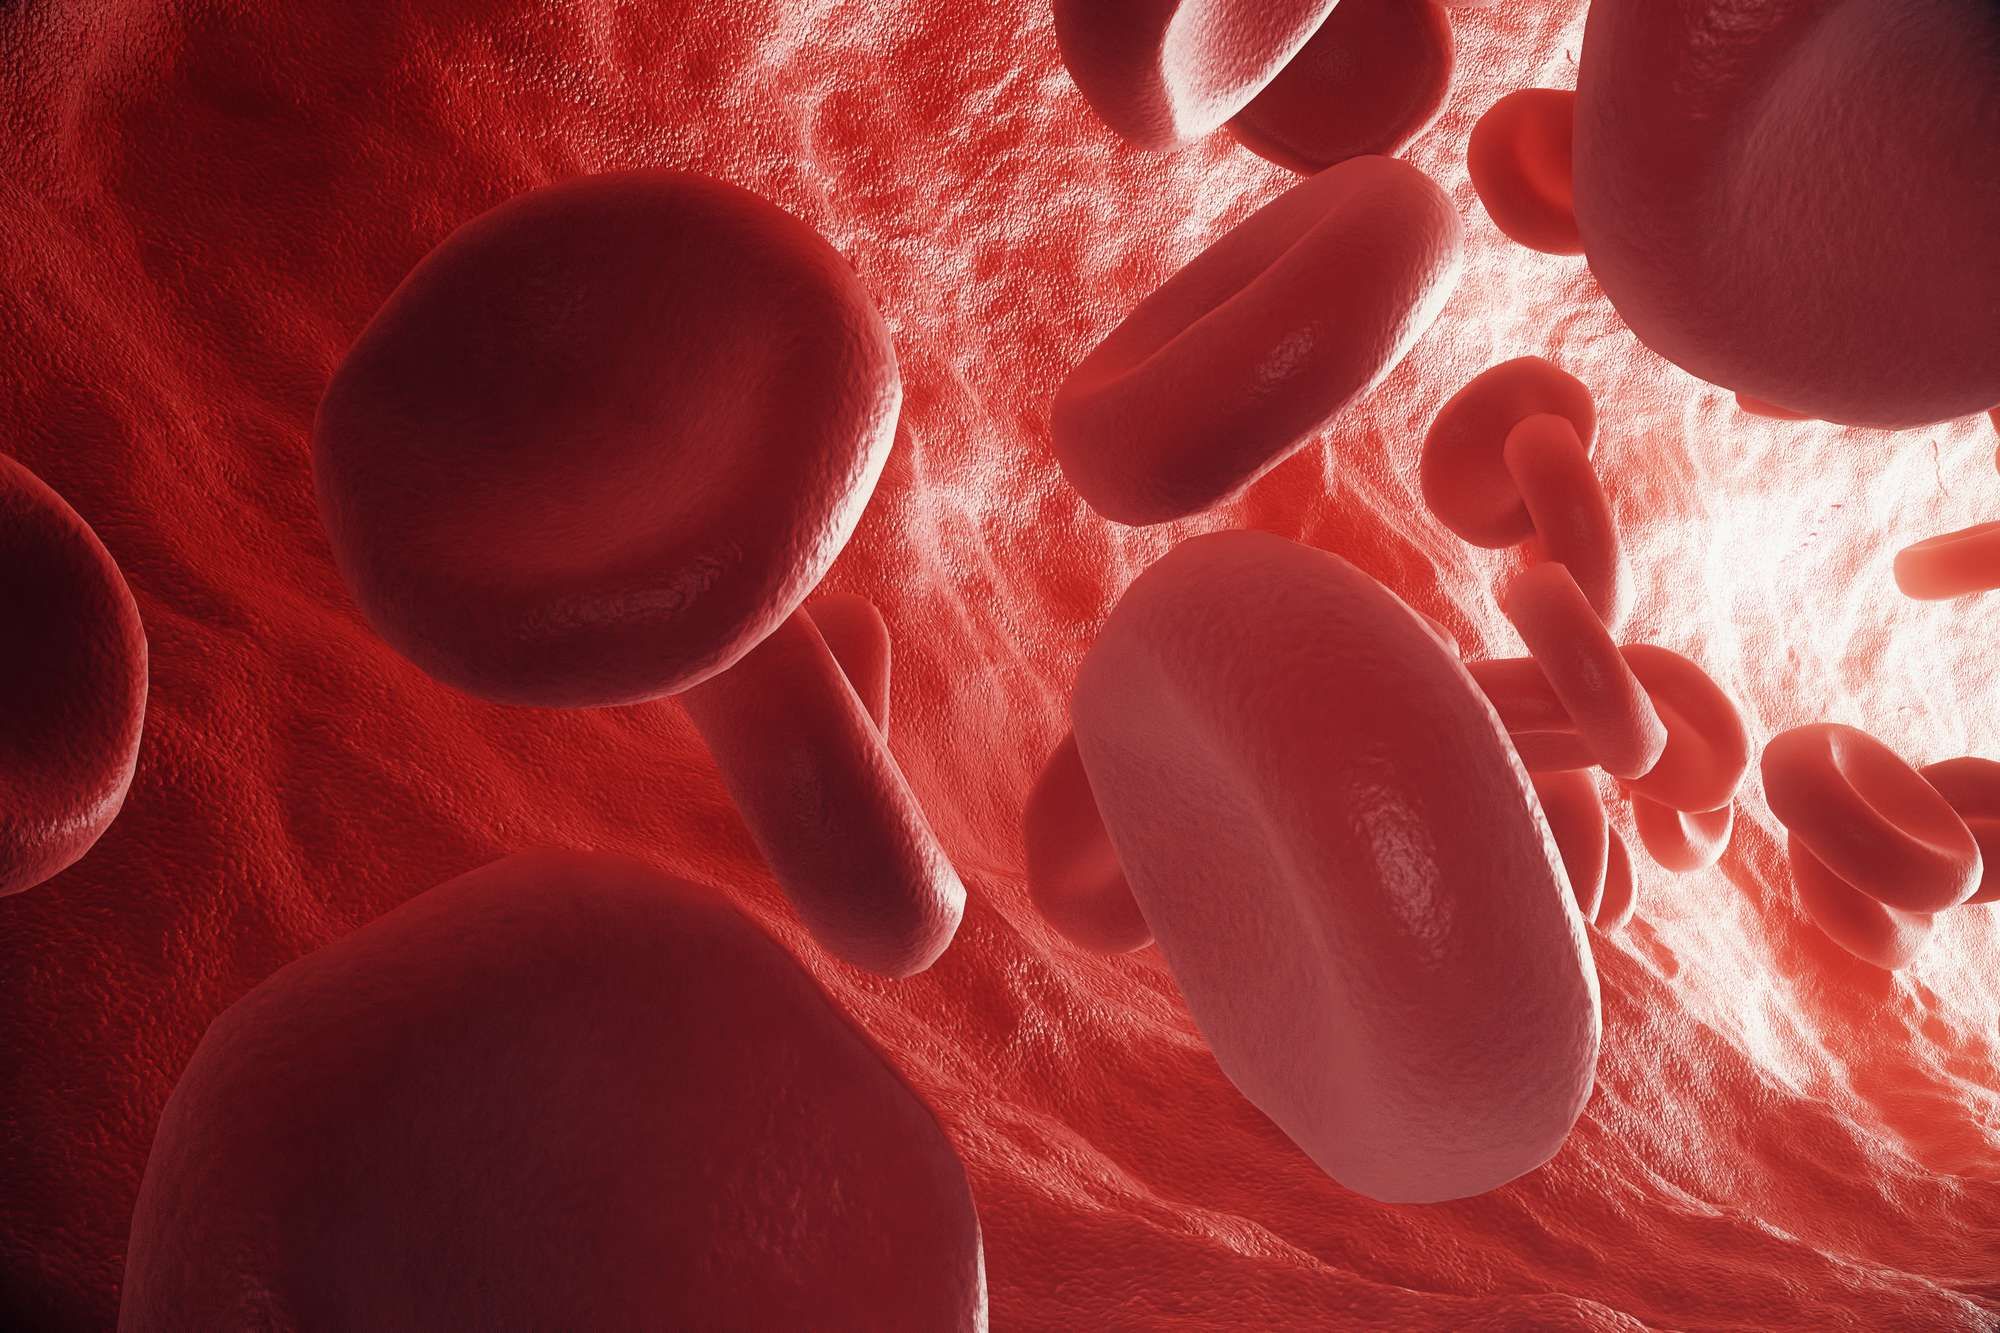 blood cells flowing in veins